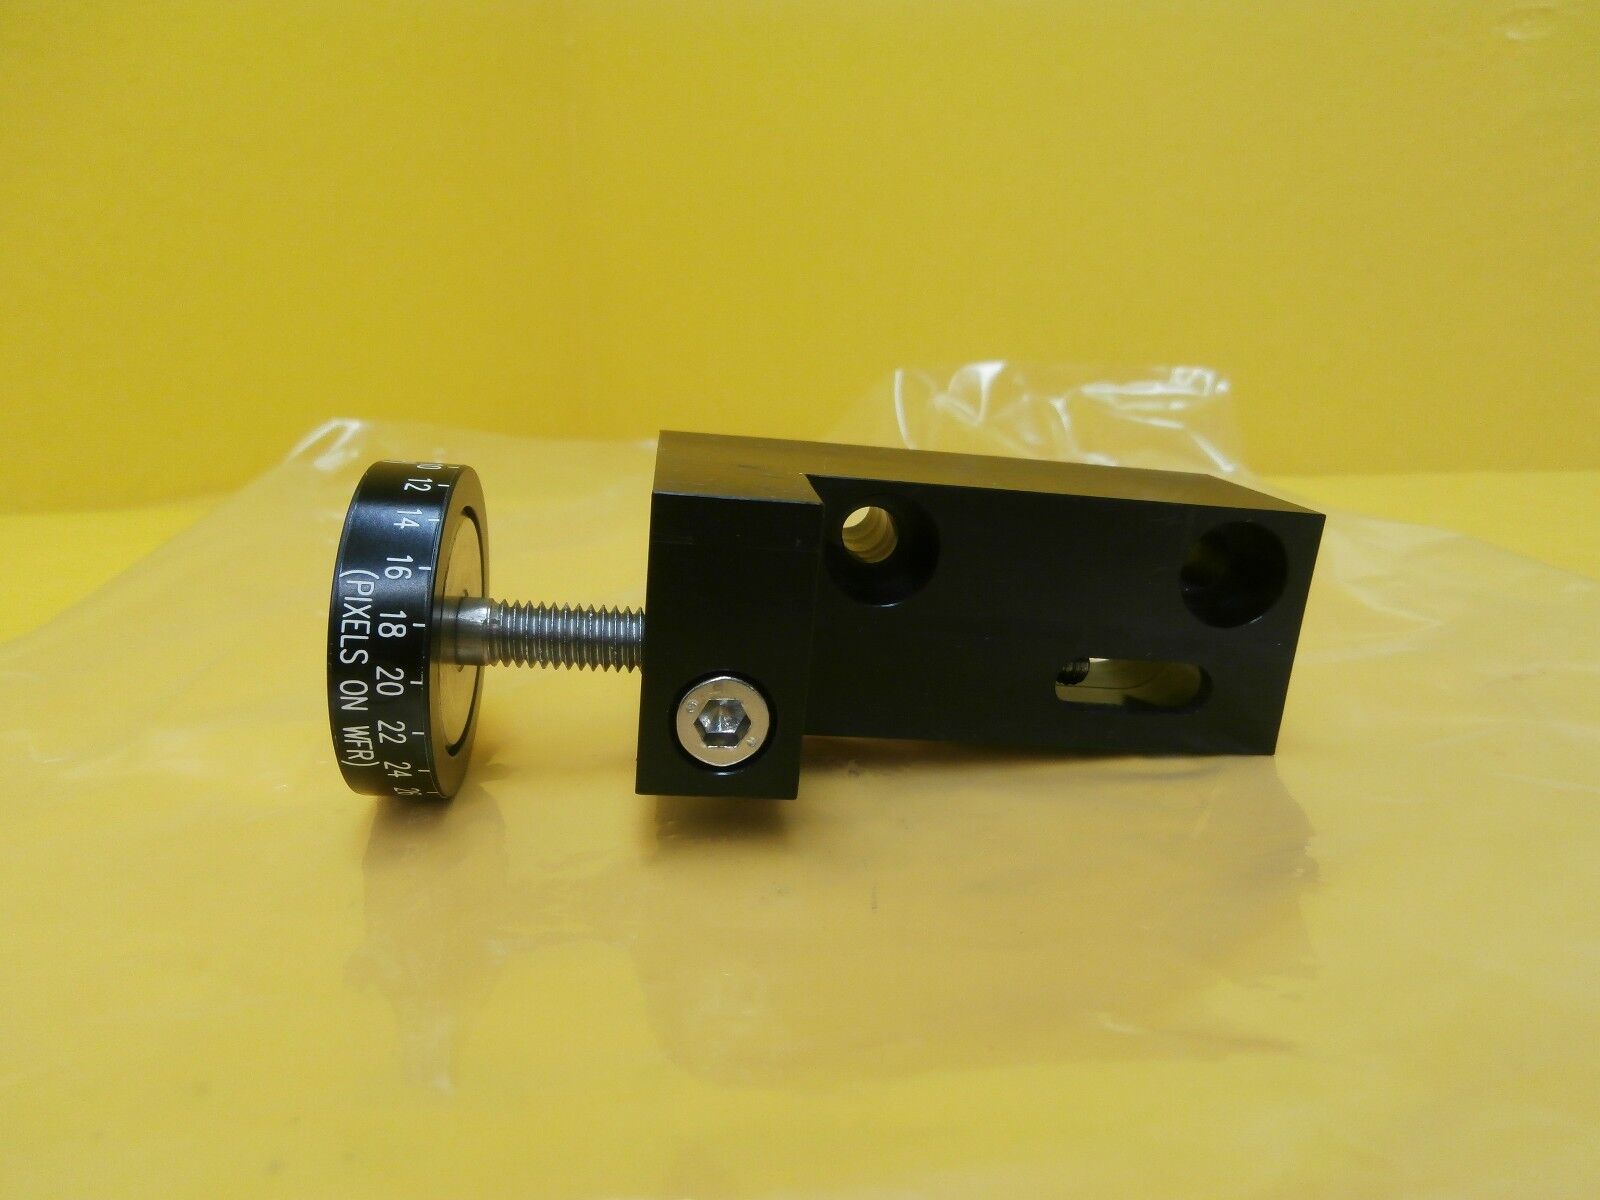 KLA-Tencor Prism Lens with WFR Adjuster Set of 2 GPIO Laser Optics AIT I Used